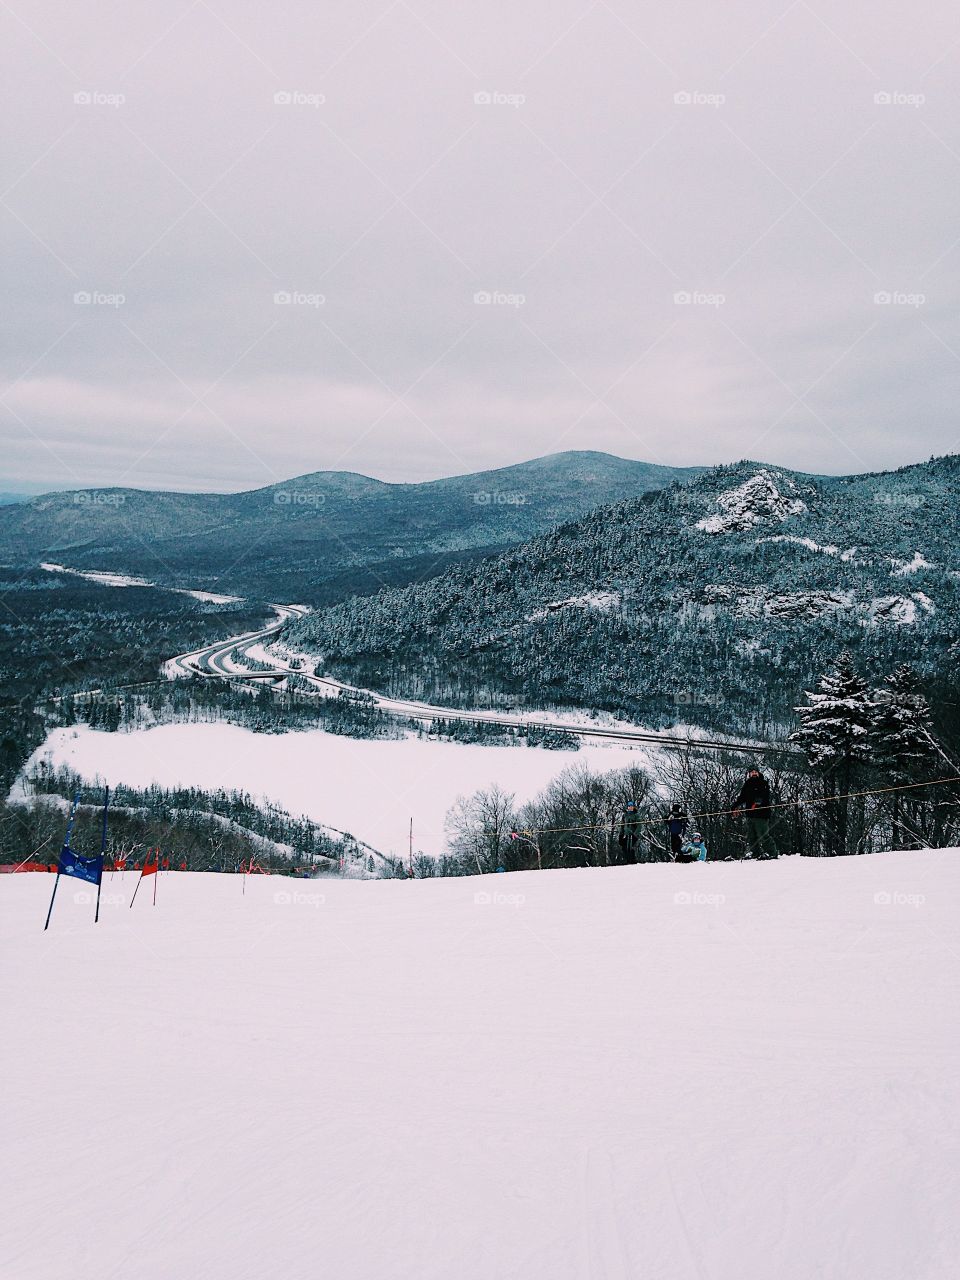 Ski racing in New Hampshire